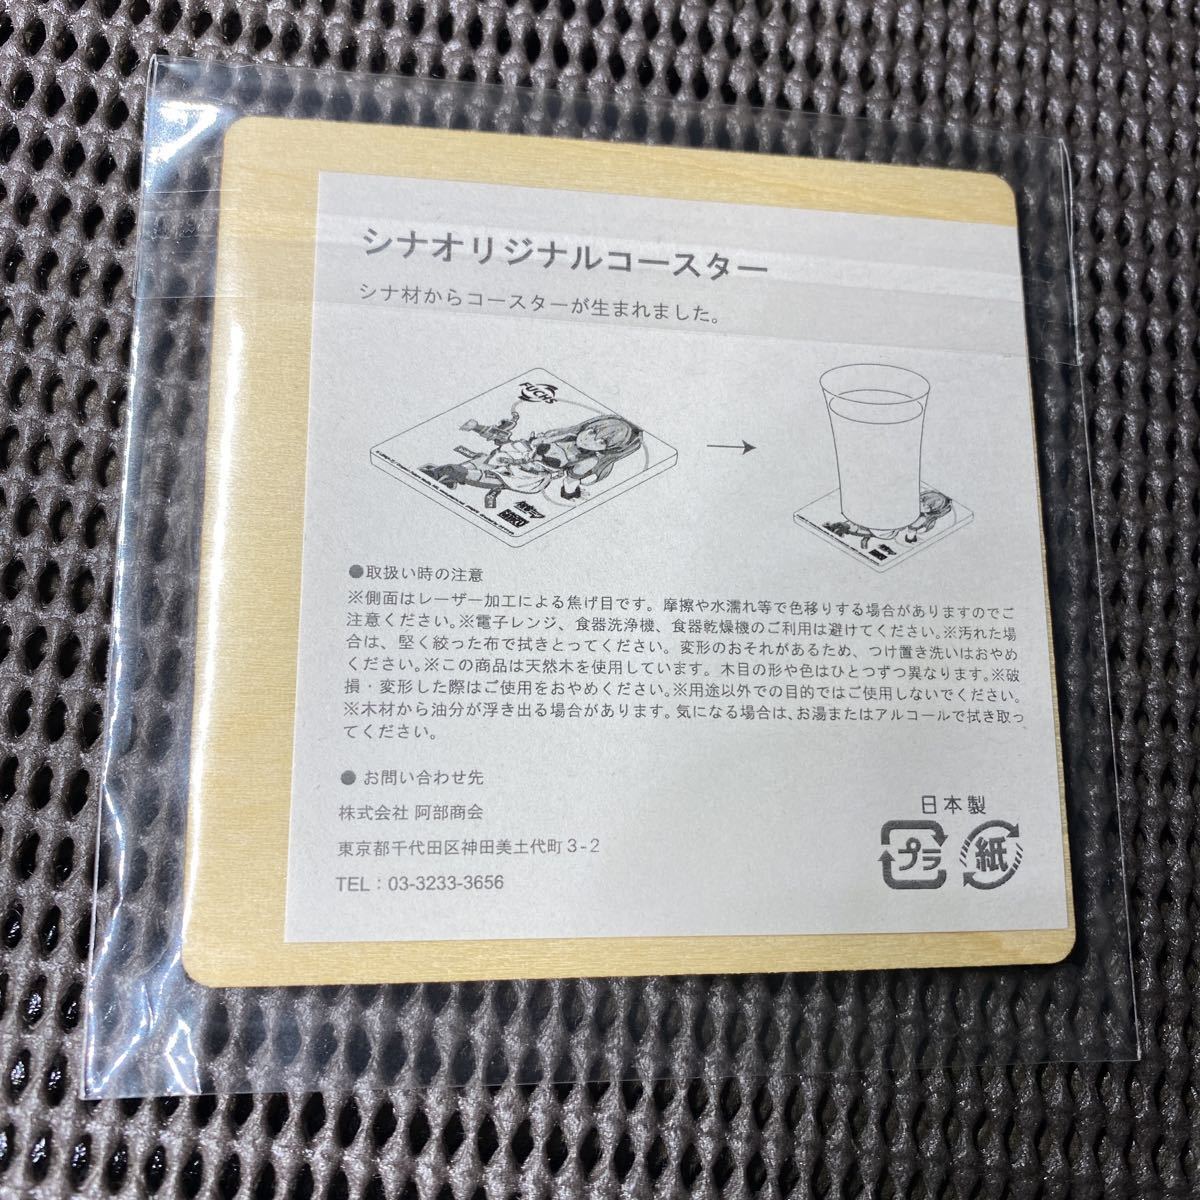  не продается #SUPER GT300gdo Smile рейсинг # рейсинг Miku 2020#sina материал Coaster # Hatsune Miku GOOD SMILE#FUCHS